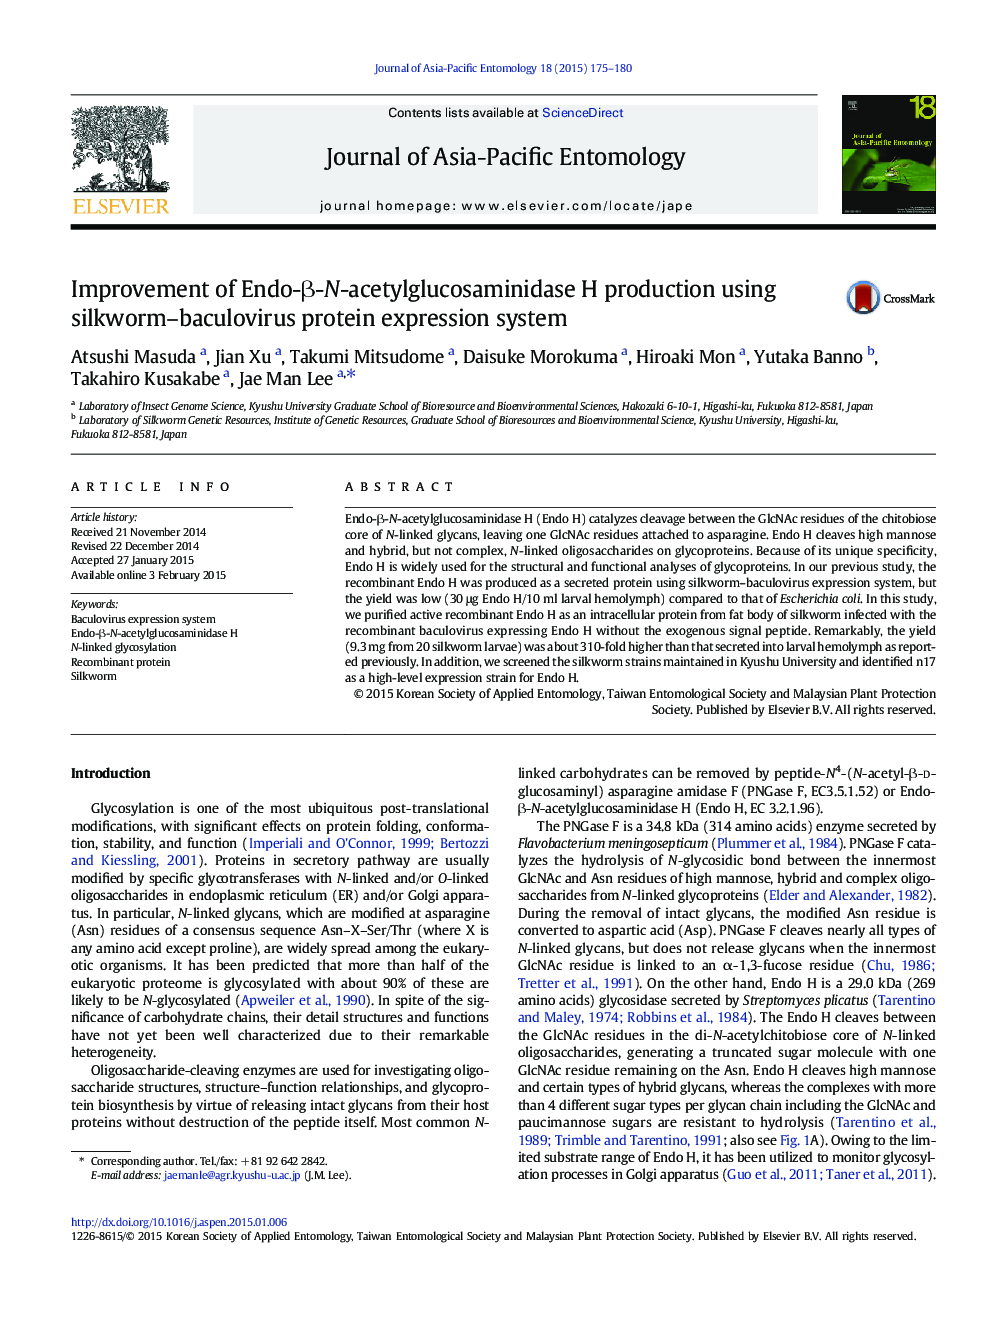 Improvement of Endo-Î²-N-acetylglucosaminidase H production using silkworm-baculovirus protein expression system